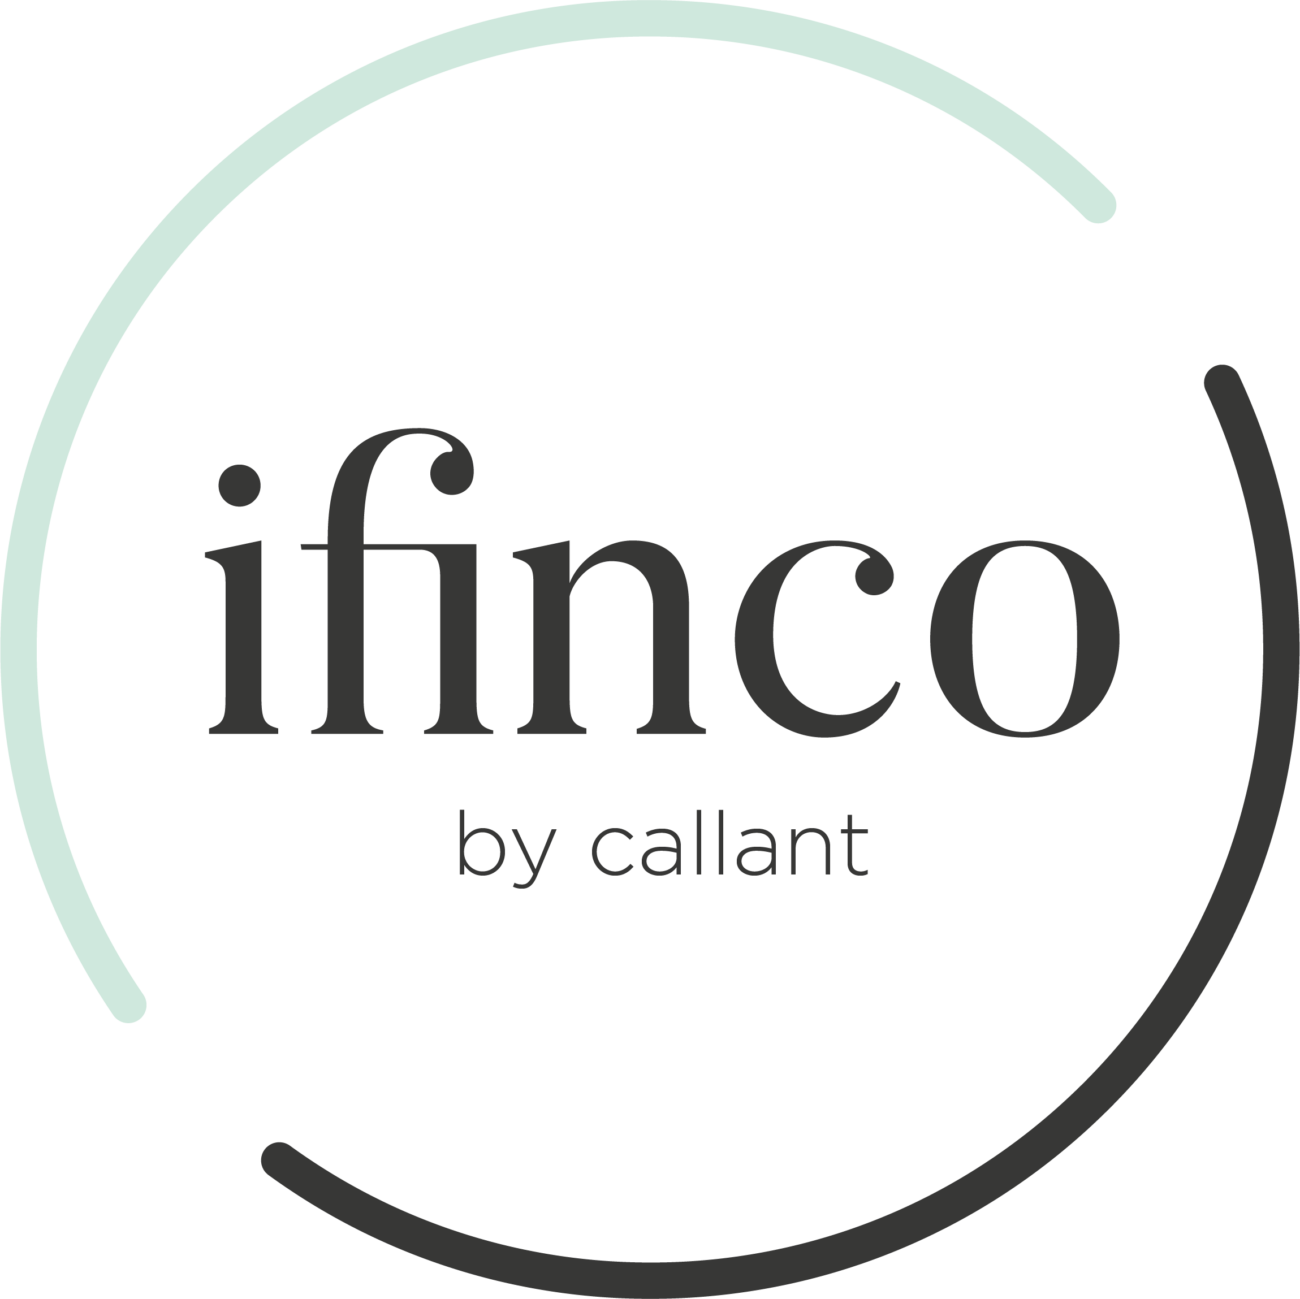 IFINCO LOGO BYCALLANT POS